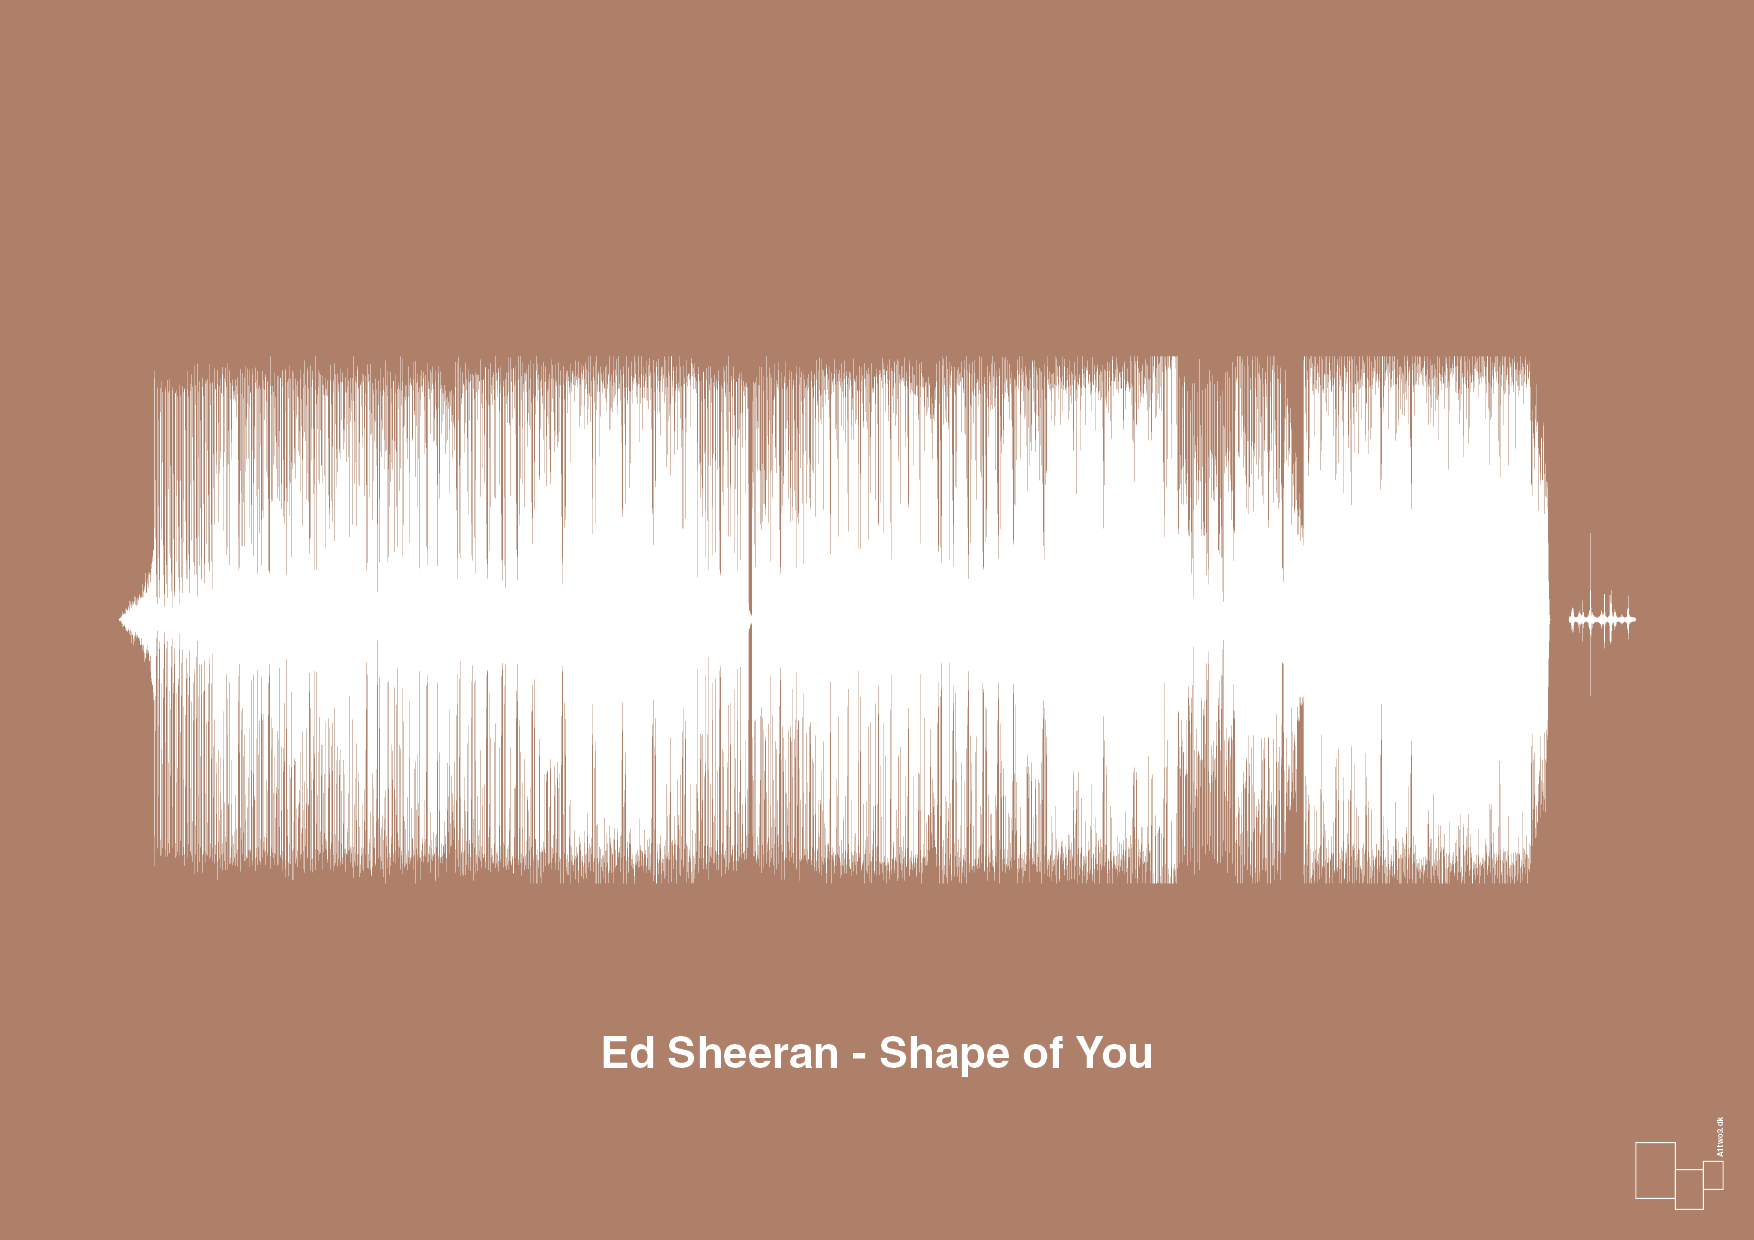 ed sheeran - shape of you - Plakat med Musik i Cider Spice